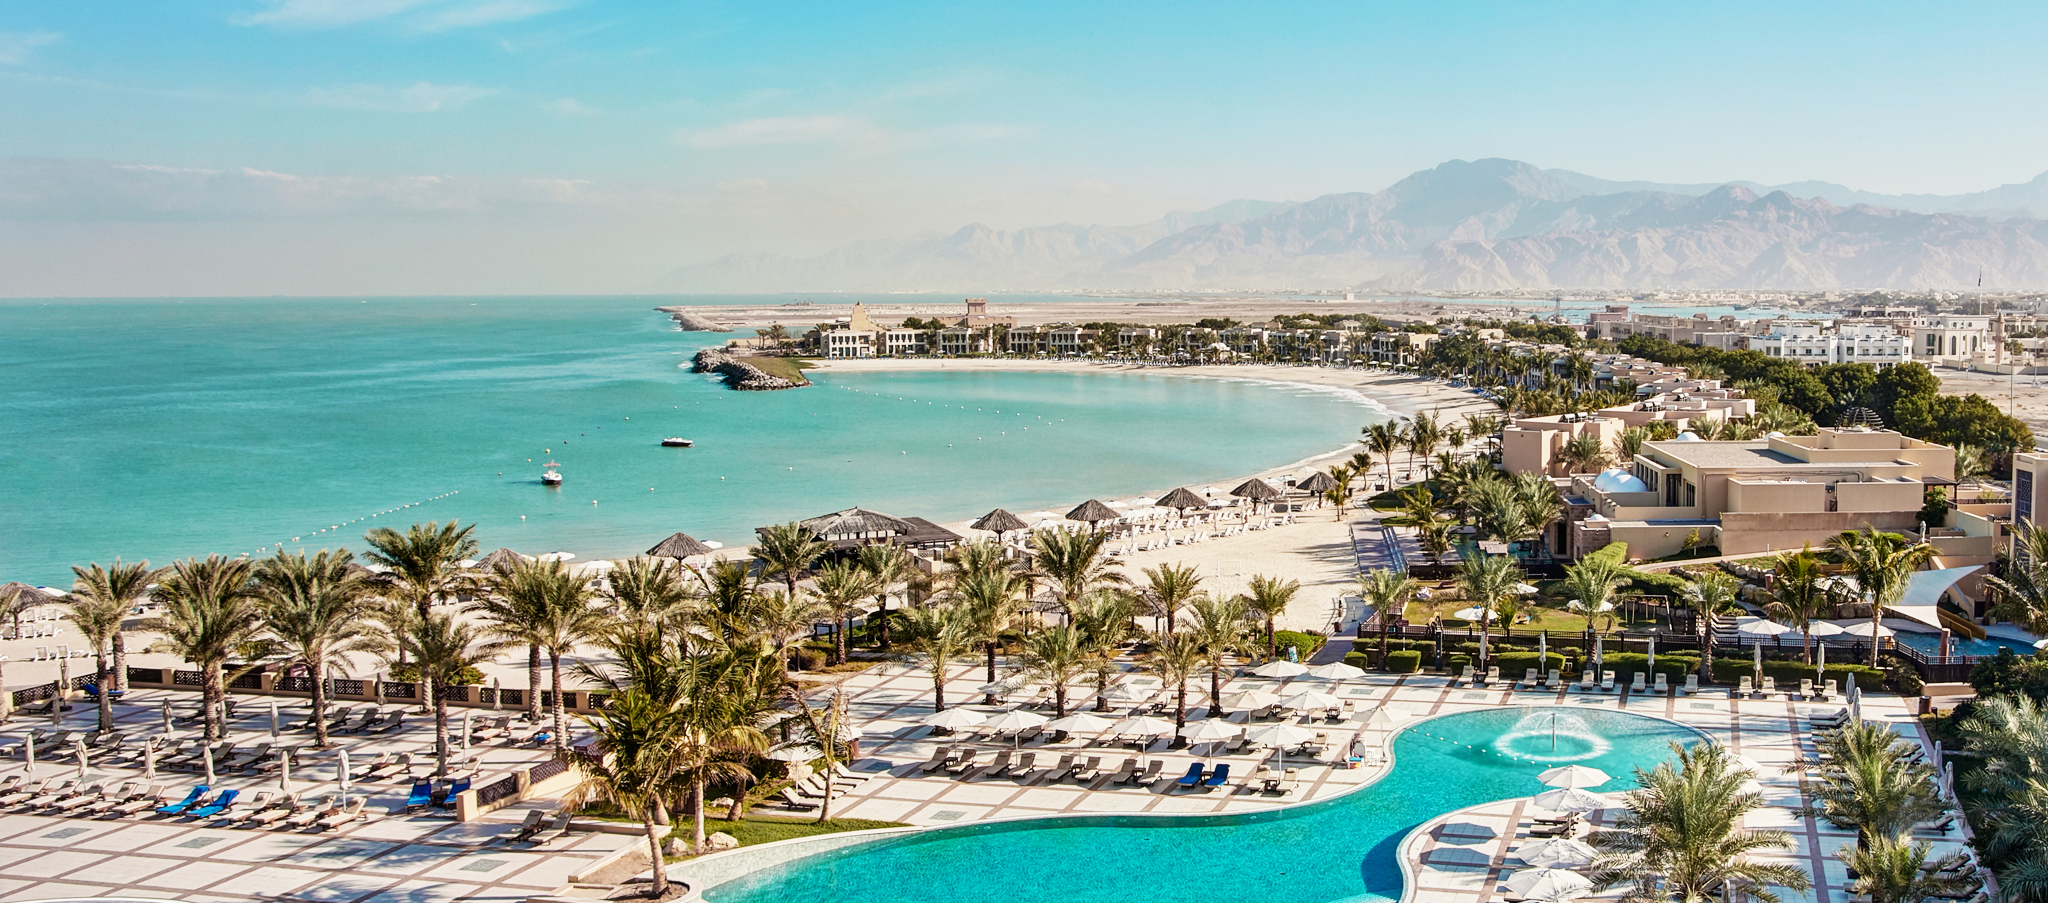 Hilton-Ras-Al-Khaimah-Beach- Resort -panoramic-view